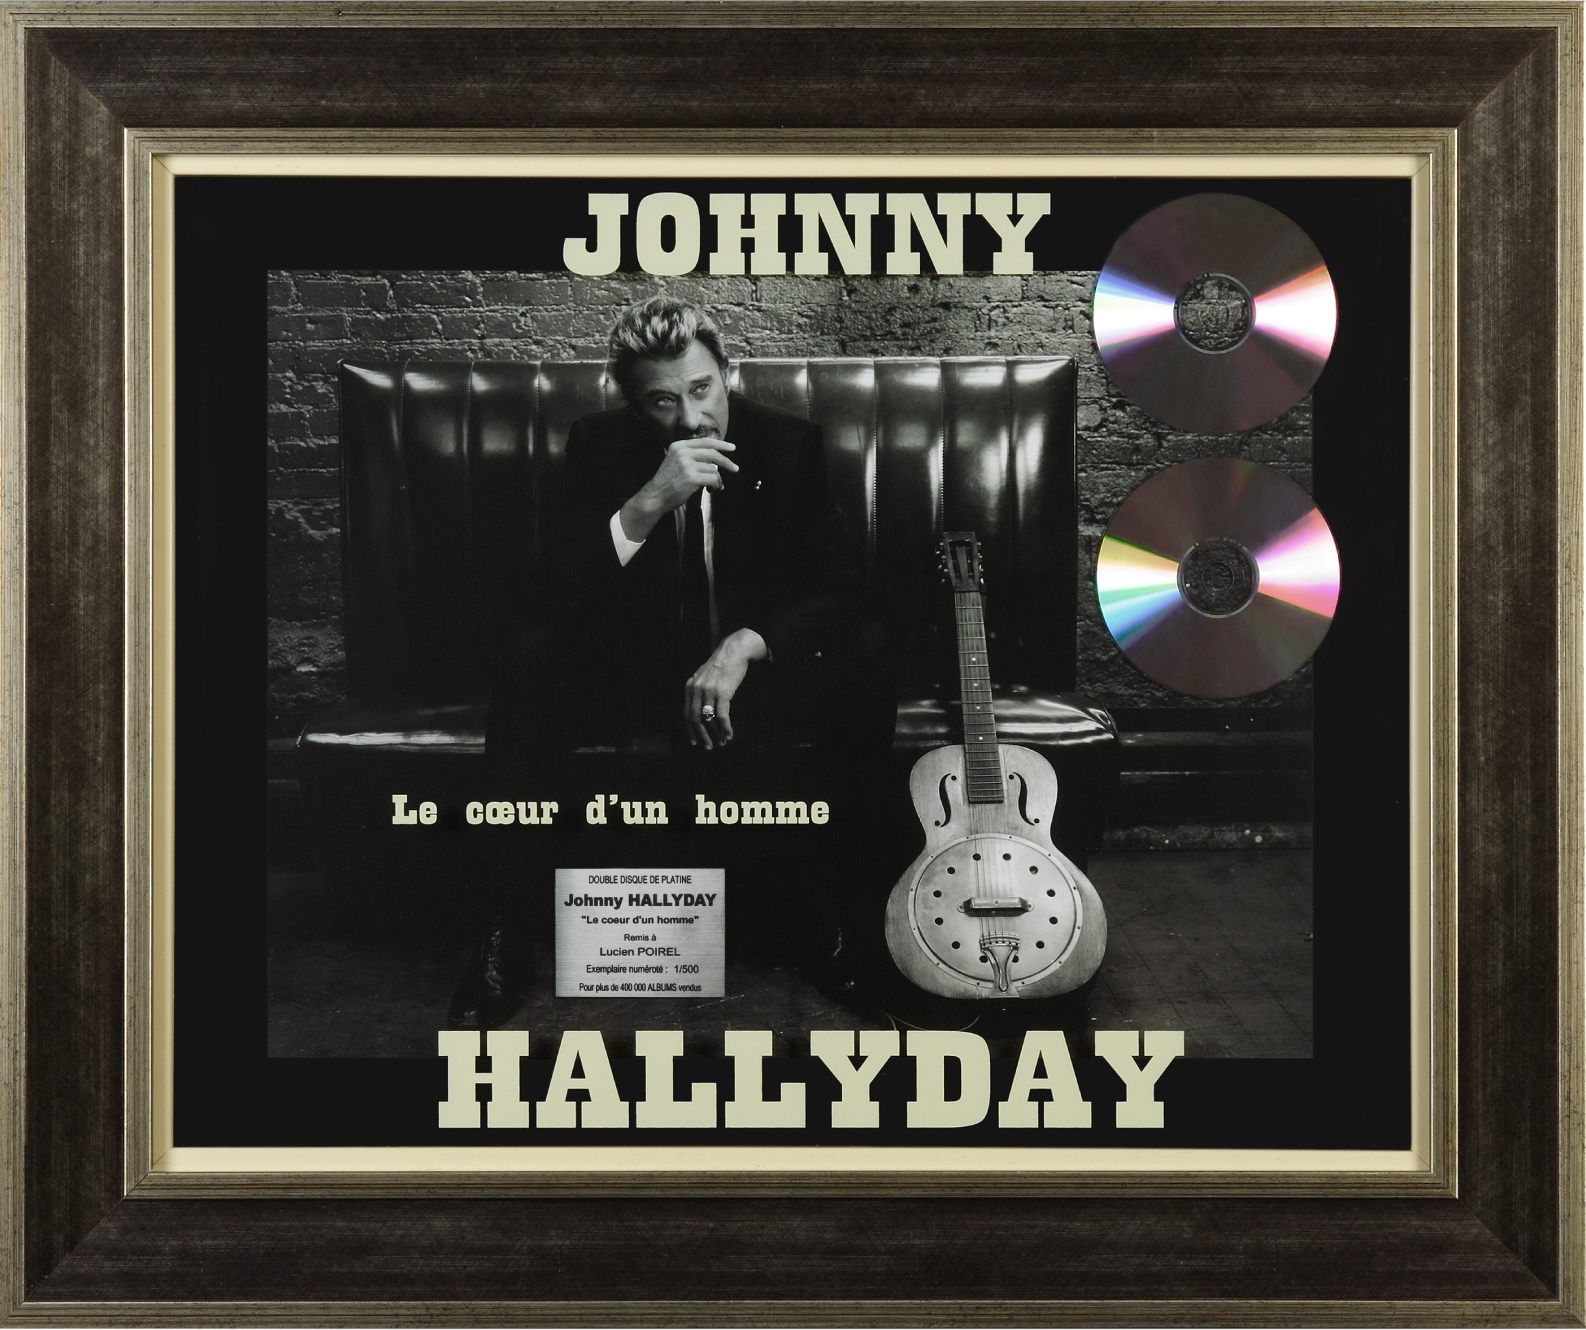 Johnny HALLYDAY - Double disque de platine 